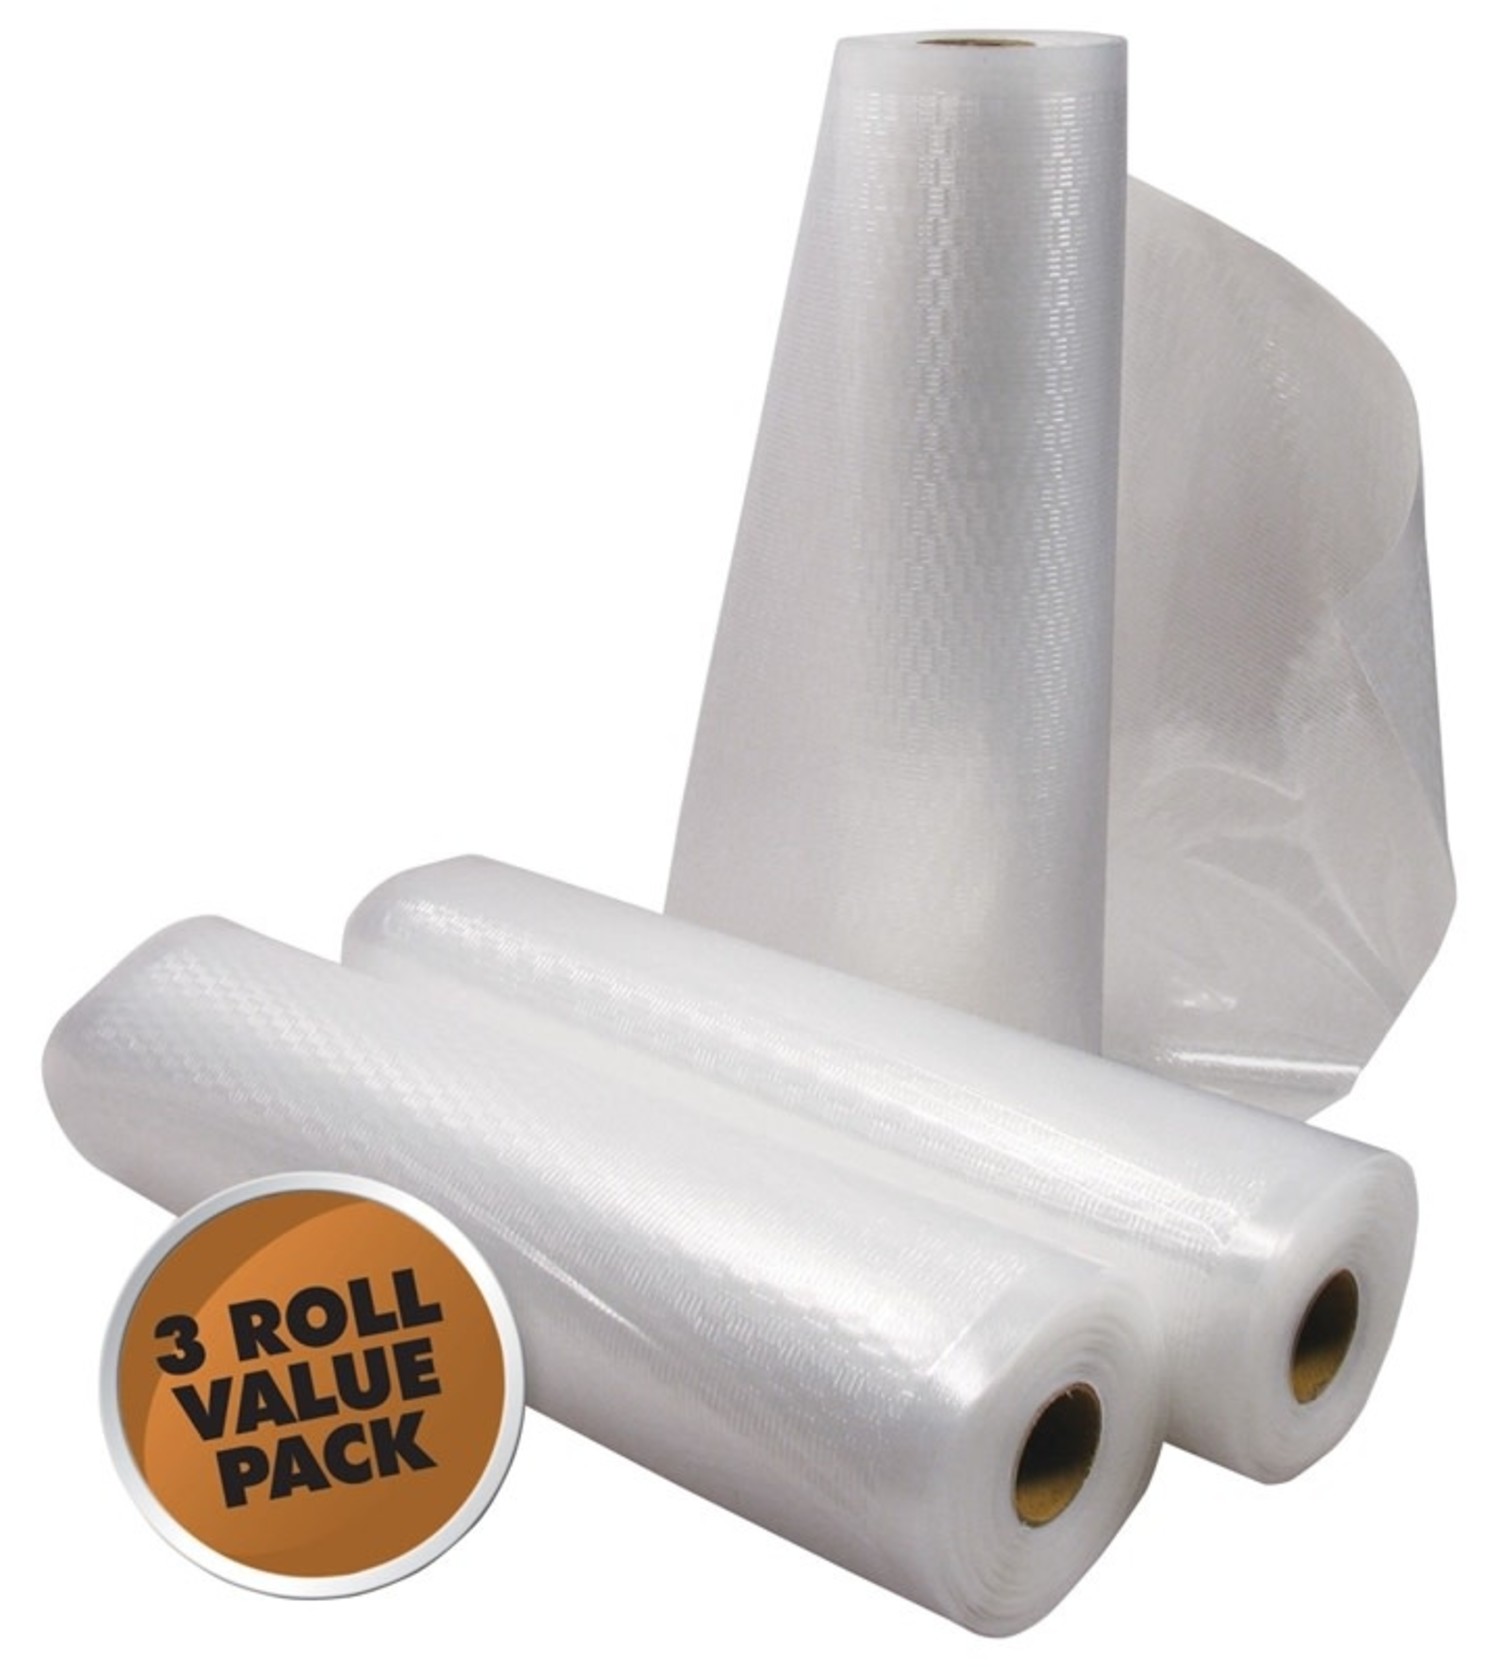 Tilia Foodsaver 8 Inch Vacuum Sealer Roll, 3 Pack